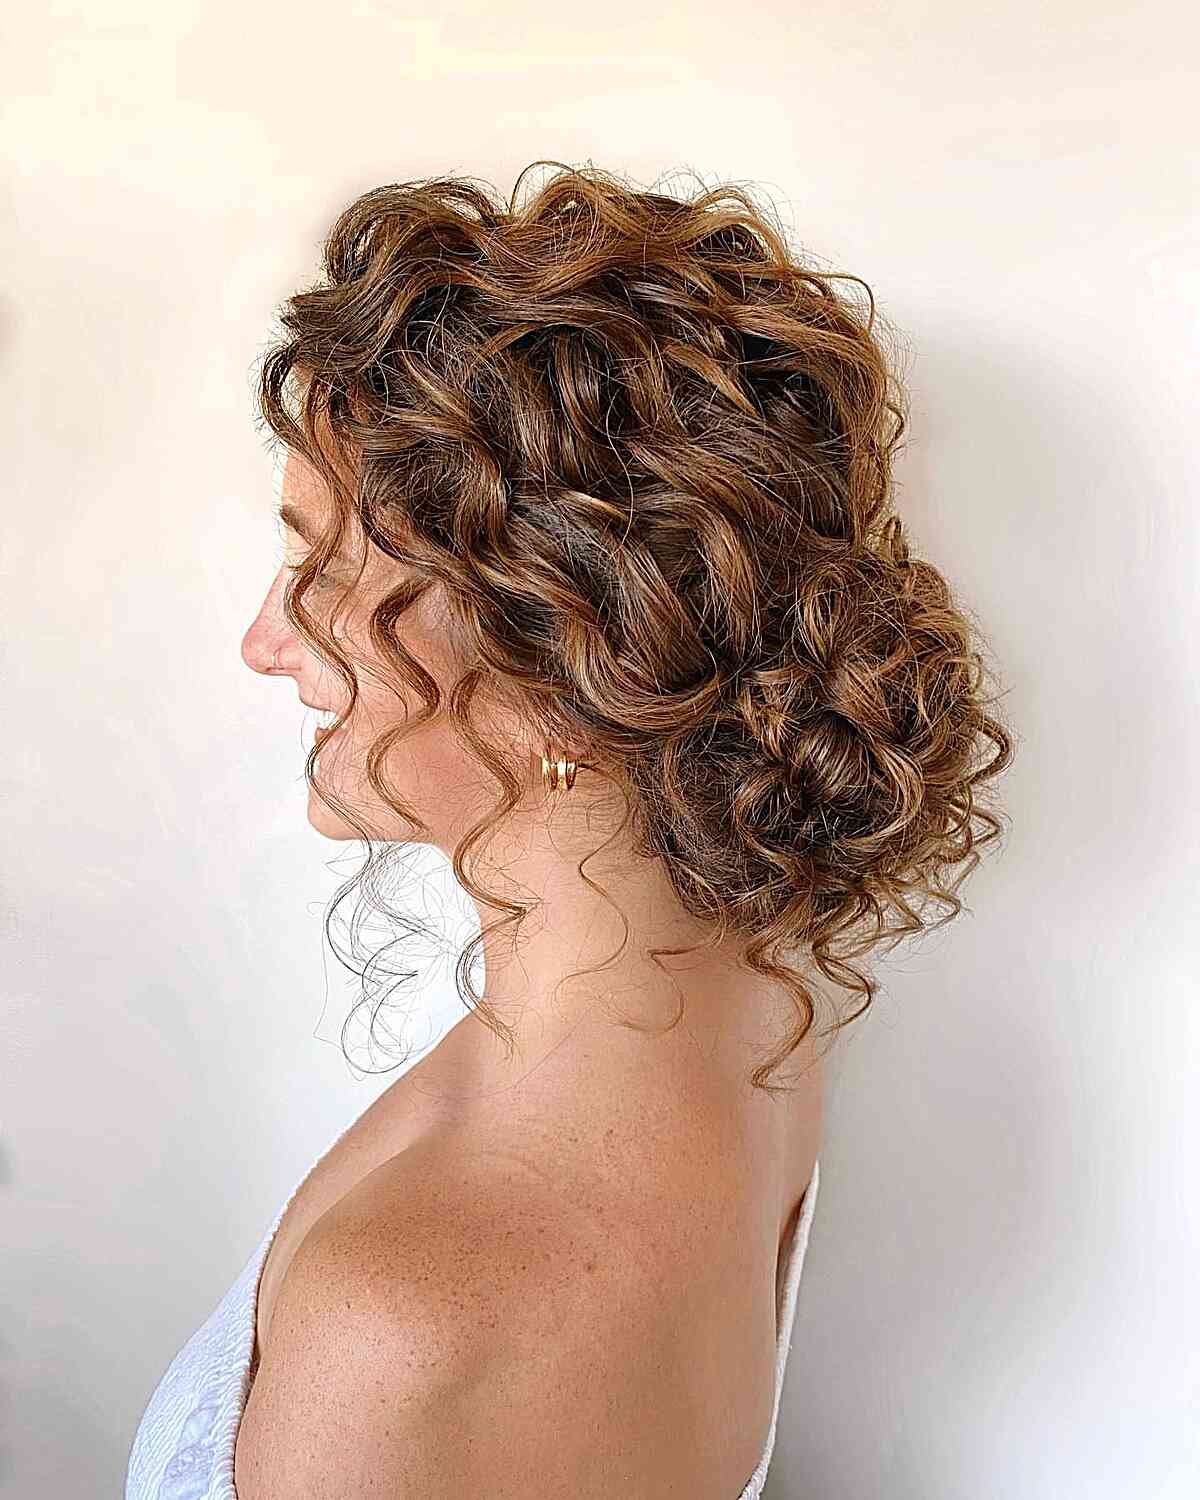 The Dreamiest Curly Wedding Hairstyle - Lulus.com Fashion Blog